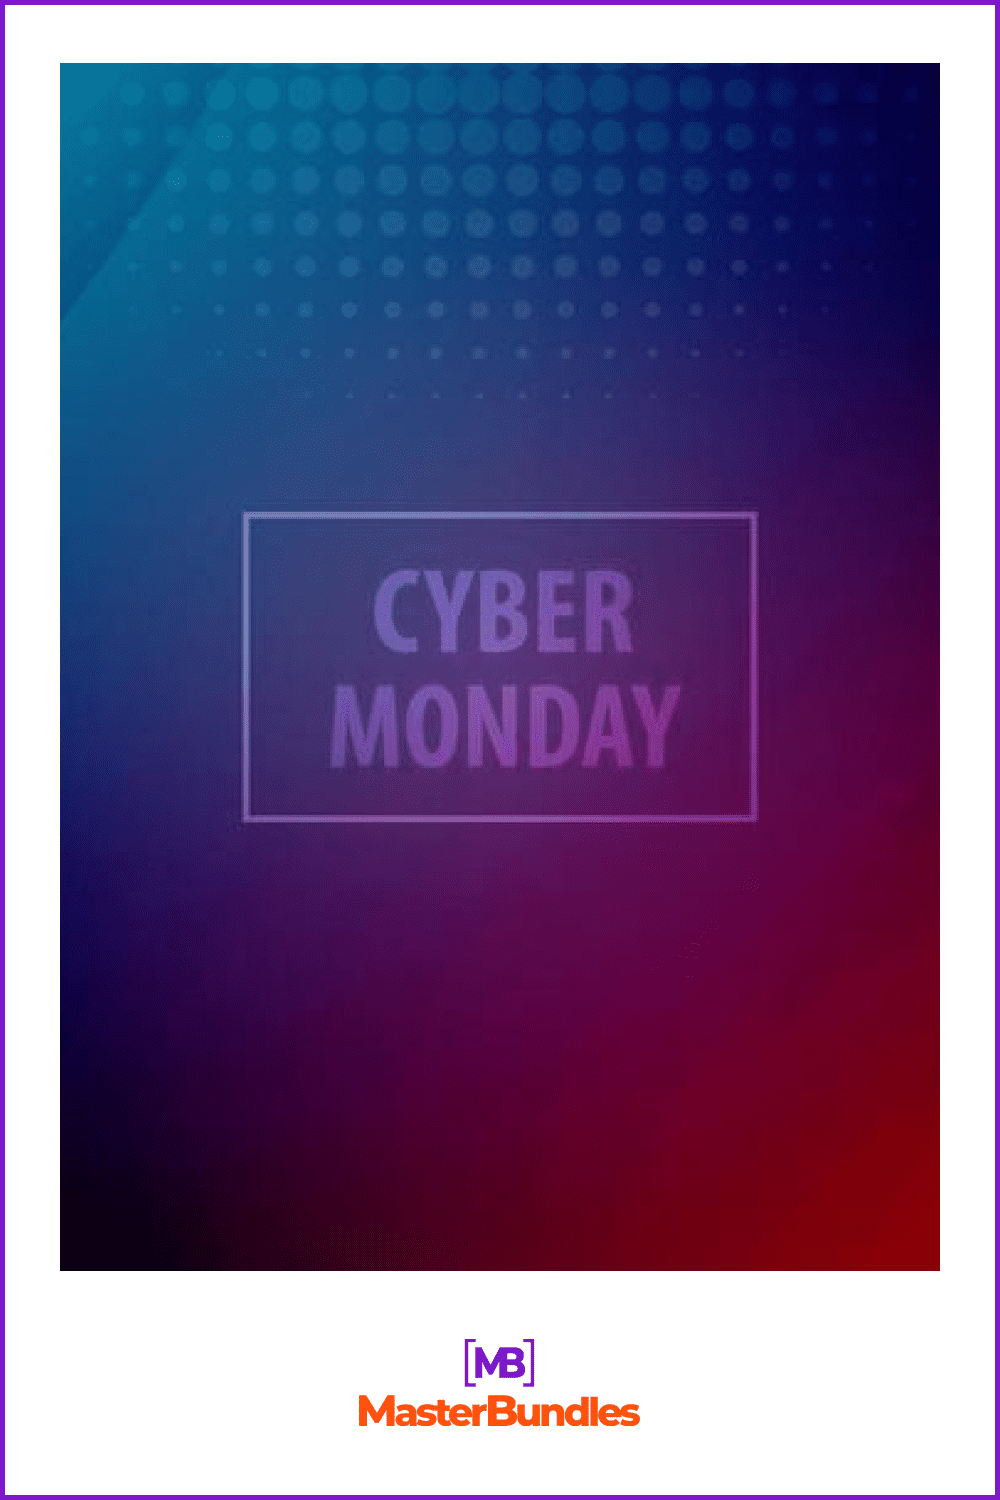 Minimalistic Cyber Monday Banner with Dark Gradient Background.